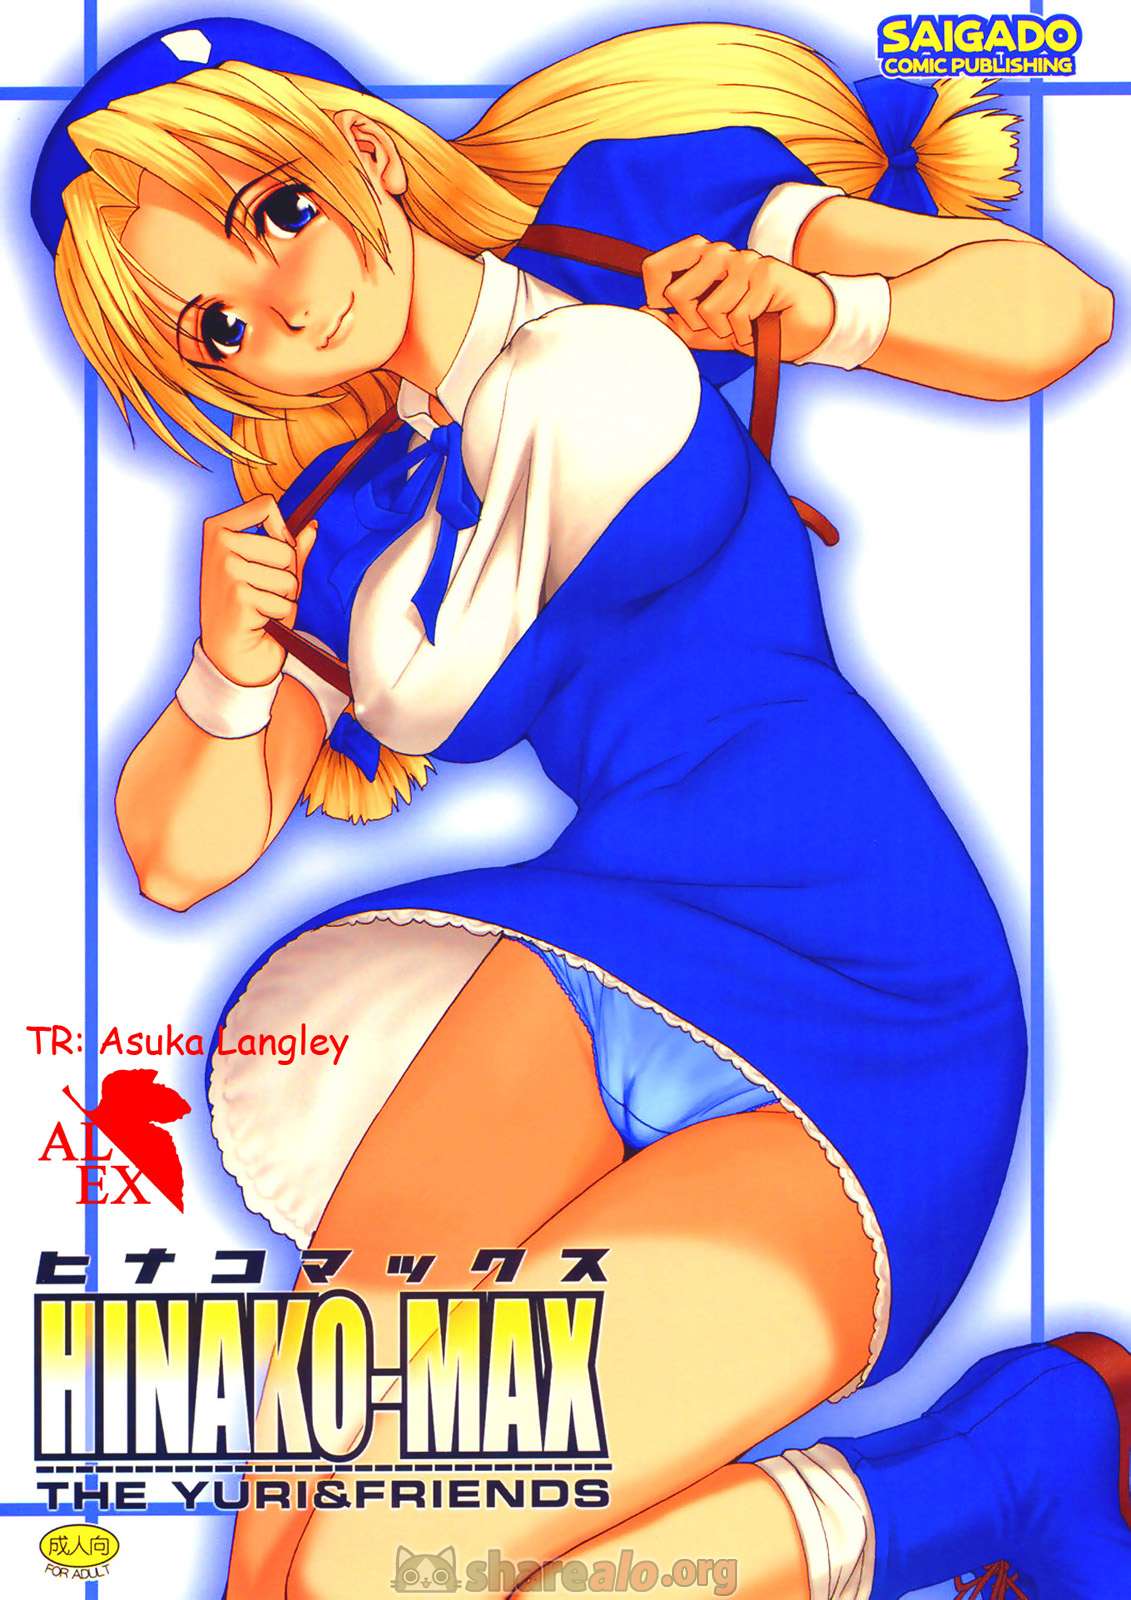 Yuri & Friends Hinako-Max King of Fighters (Saigado) - 1 - Comics Porno - Hentai Manga - Cartoon XXX